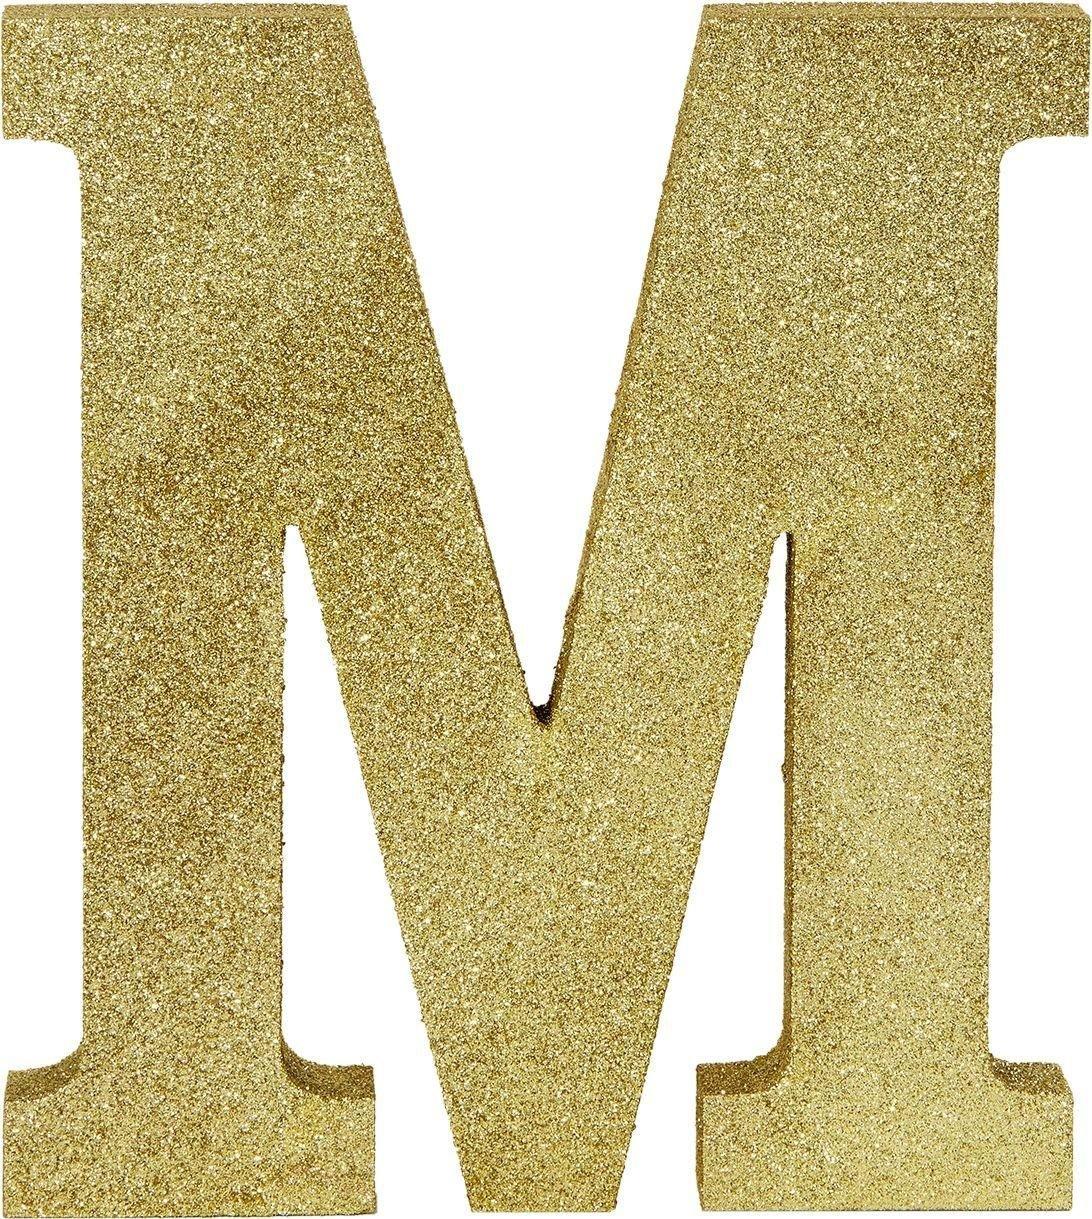 Glitter Gold Mr. & Mr. MDF Table Sign Kit, 5pc